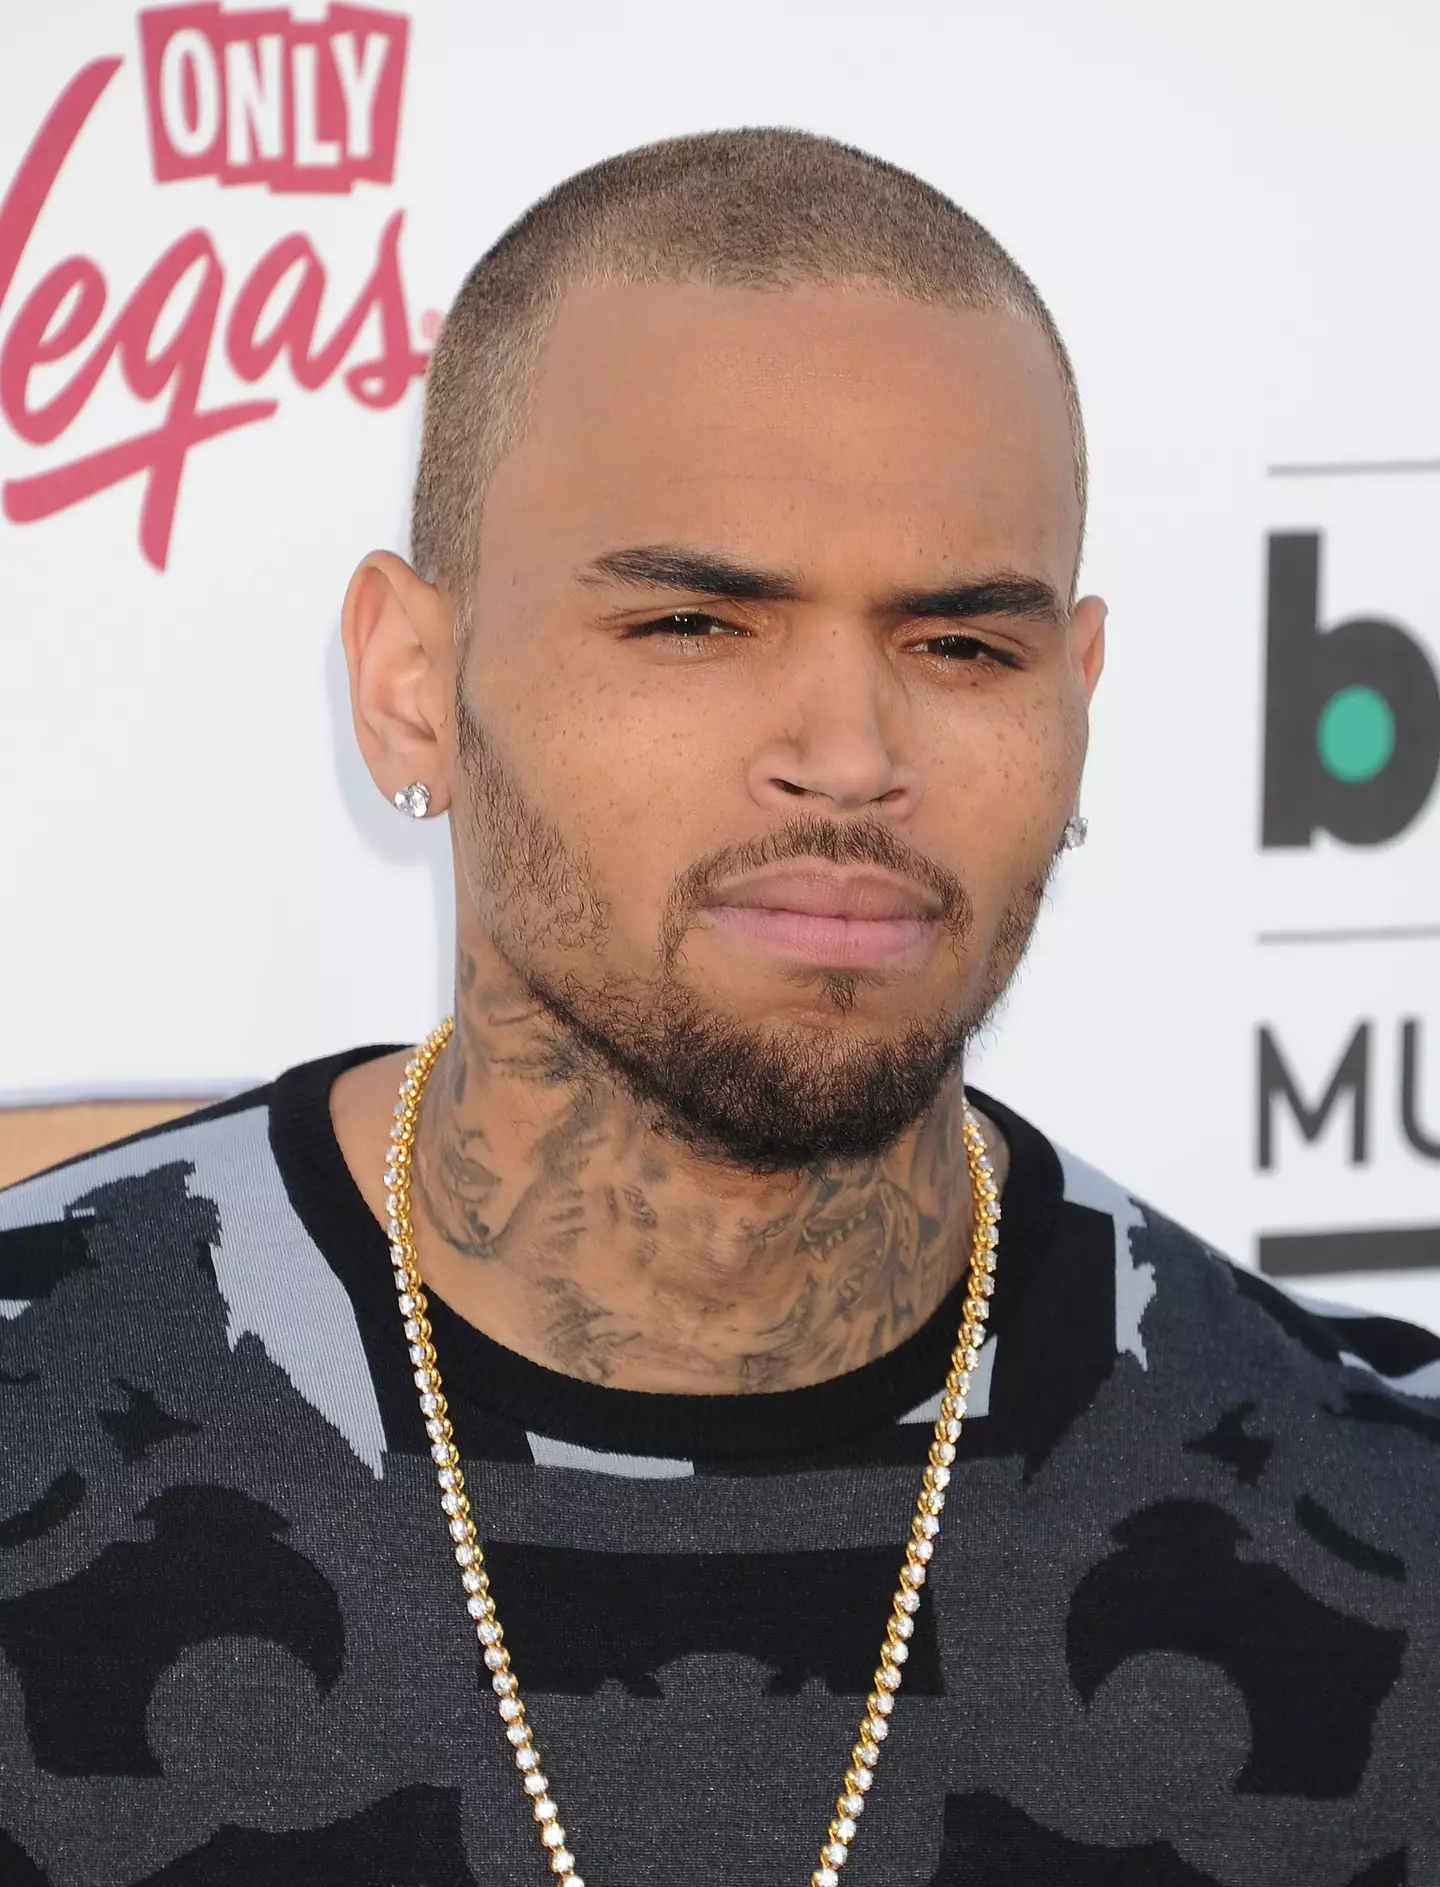 Chris Brown won at the American Music Awards.